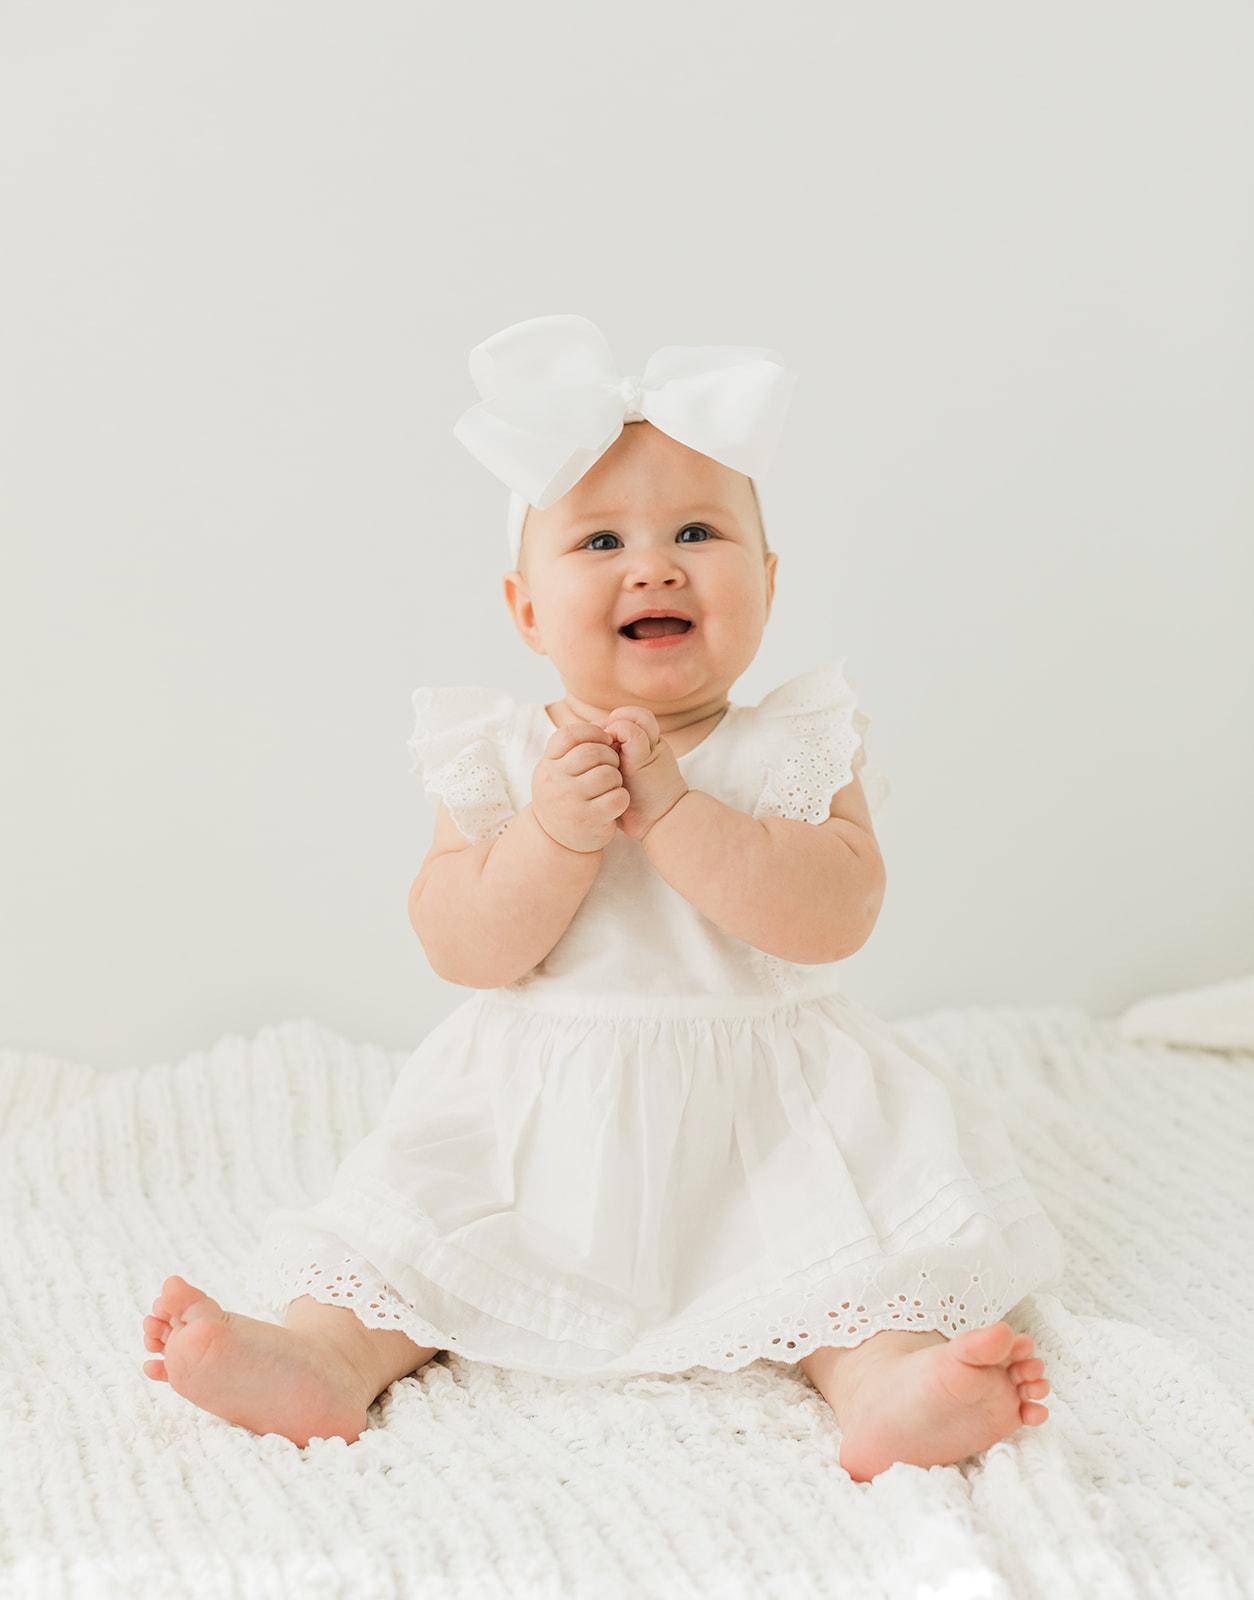 Nashville baby photographer. Smiling baby girl